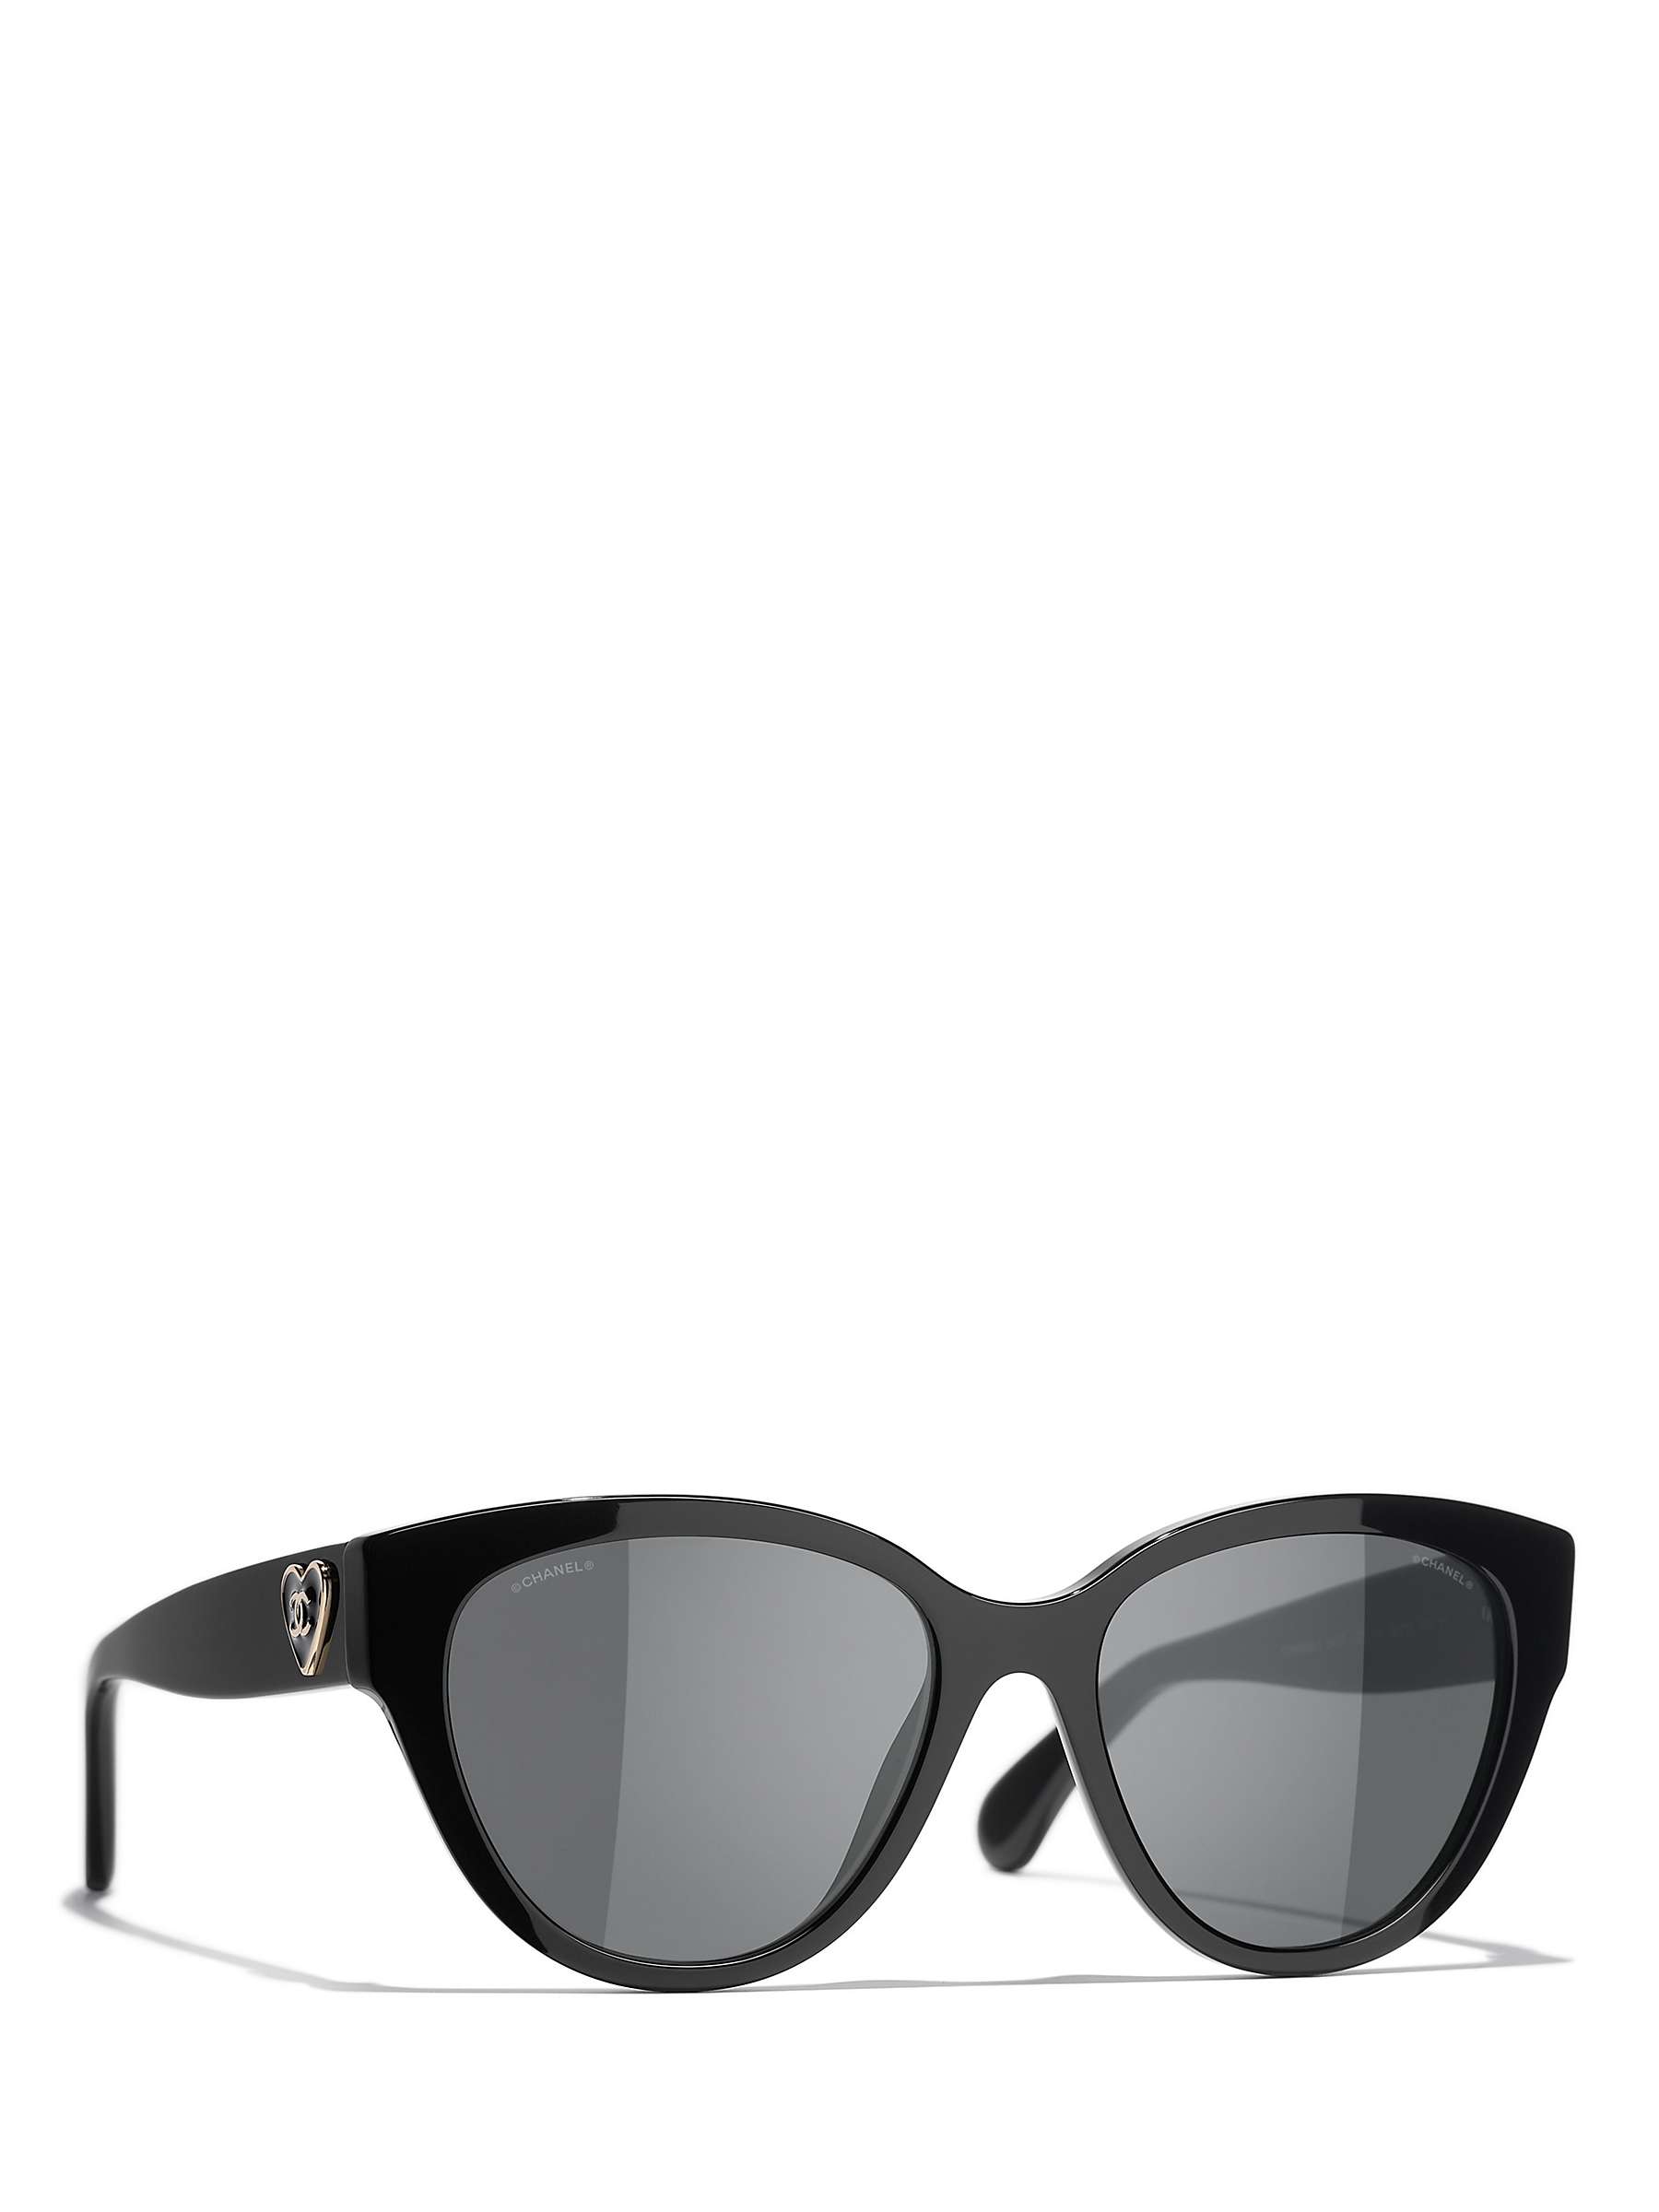 Buy CHANEL CH5477 Women's Cat's Eye Sunglasses, Black/Grey Online at johnlewis.com